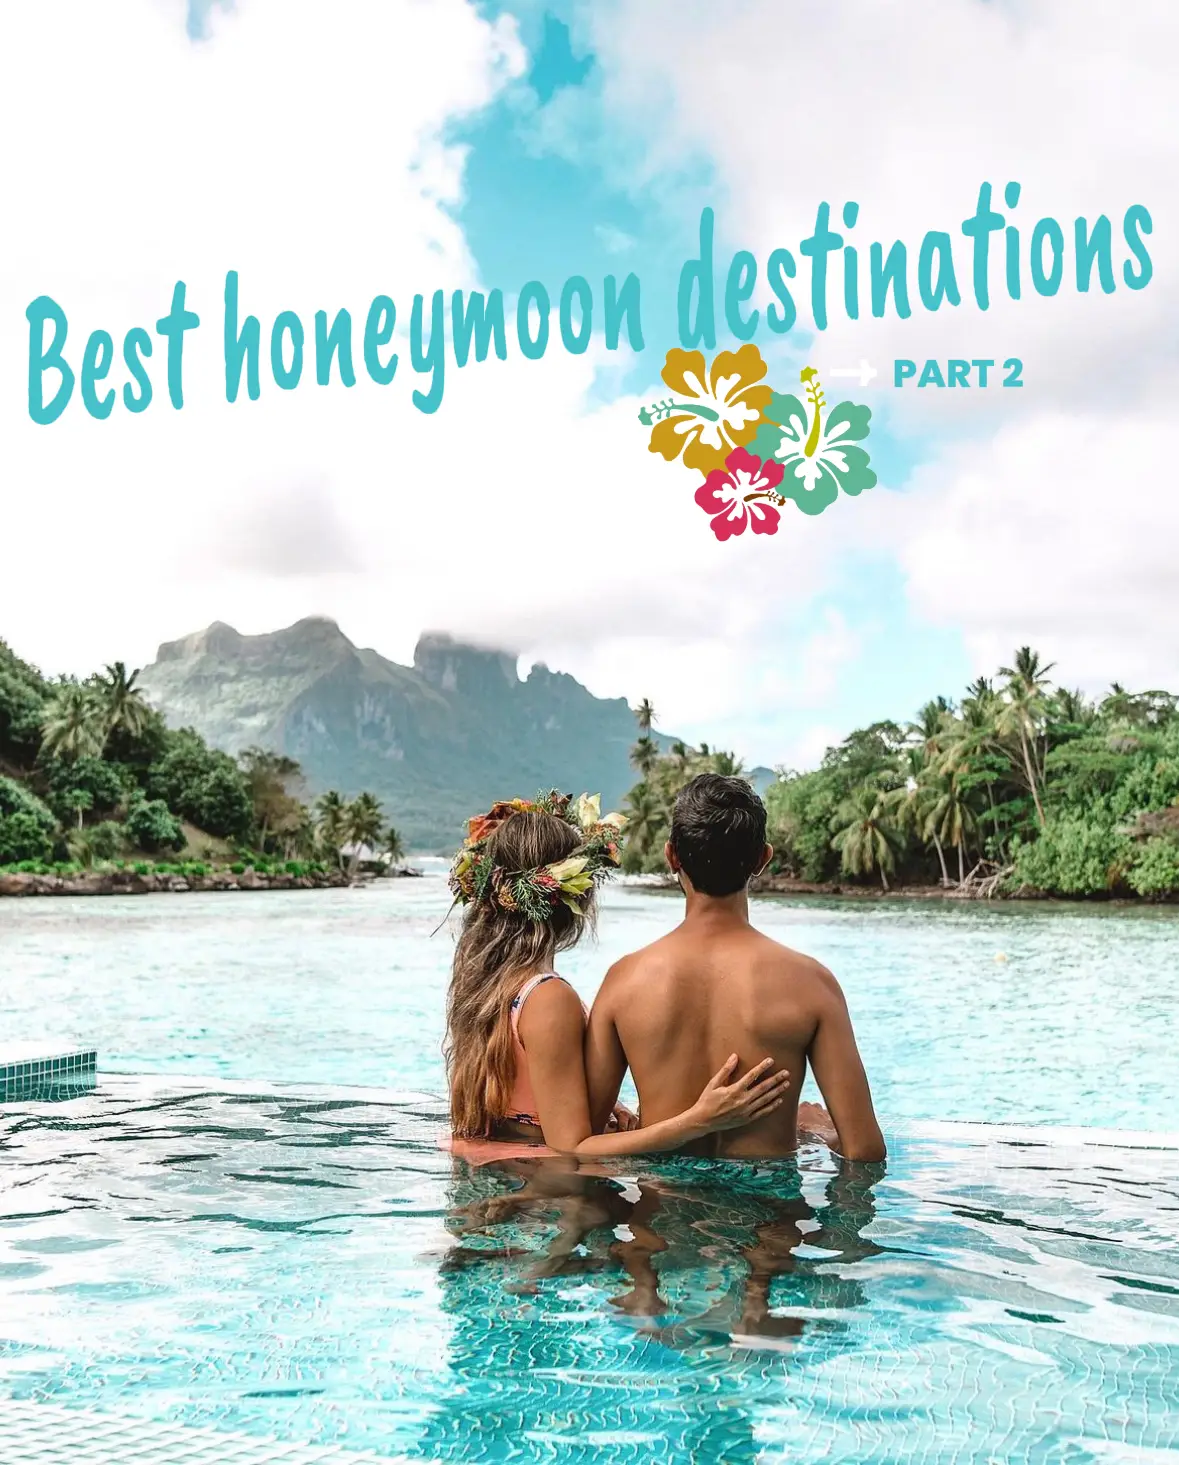 30 Honeymoon Photo Ideas For Unforgettable Memories #Honeymoon